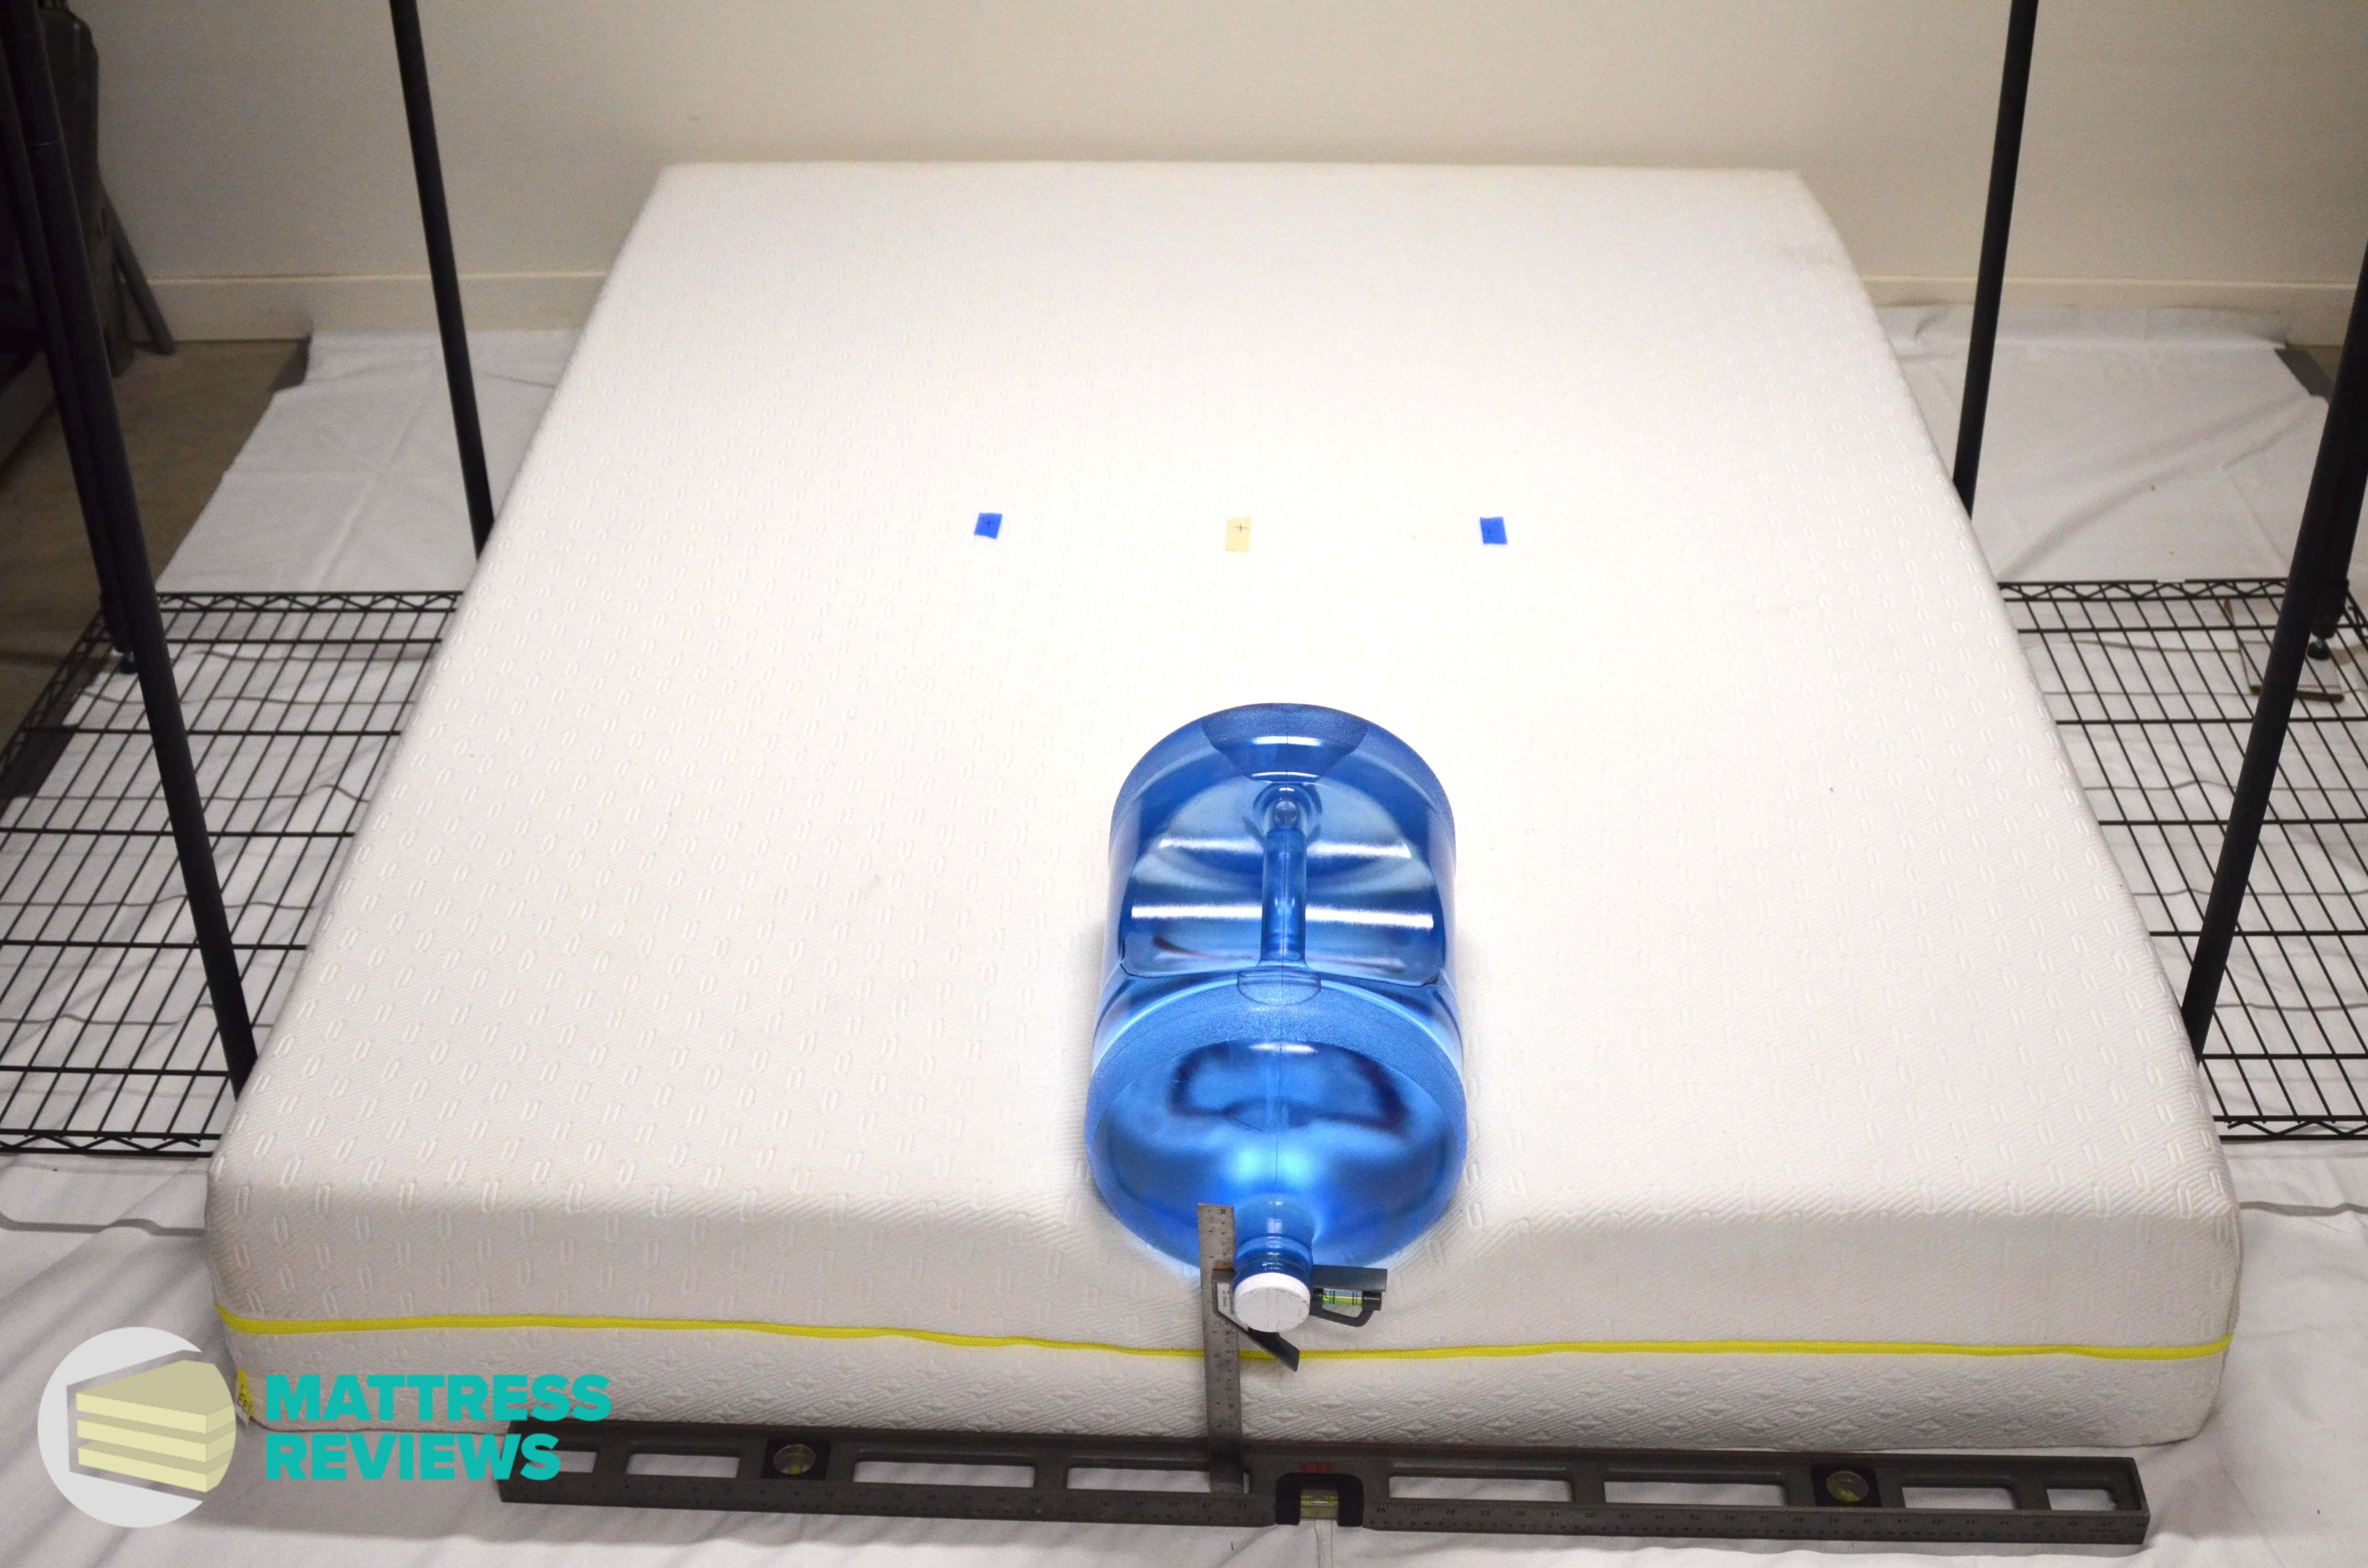 Image of the Fleep Soft mattress edge support test.